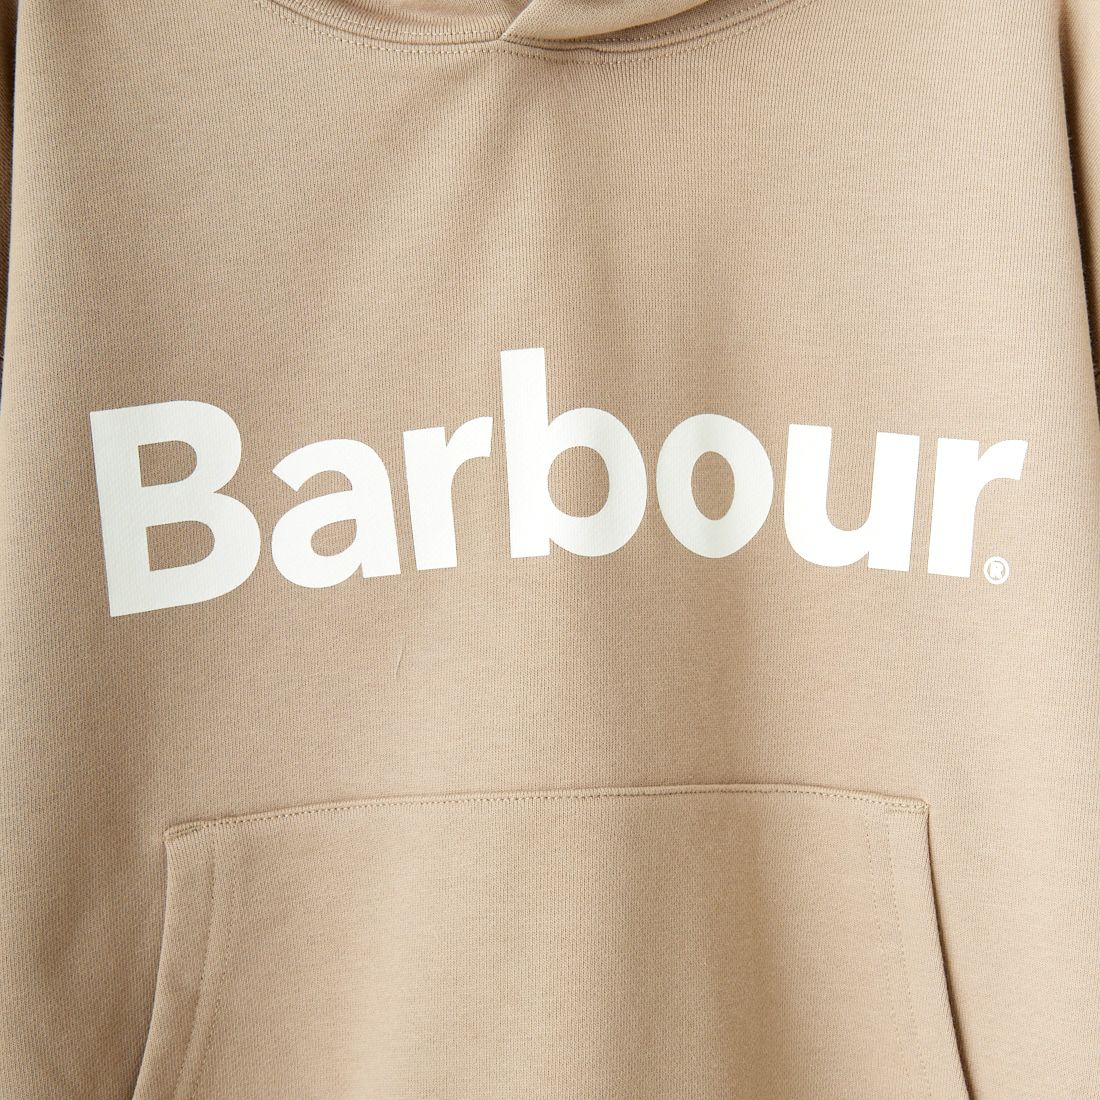 Barbour [バブアー] BARBOURロゴ スウェットフードパーカー [241LOLG002] DK.BEIGE